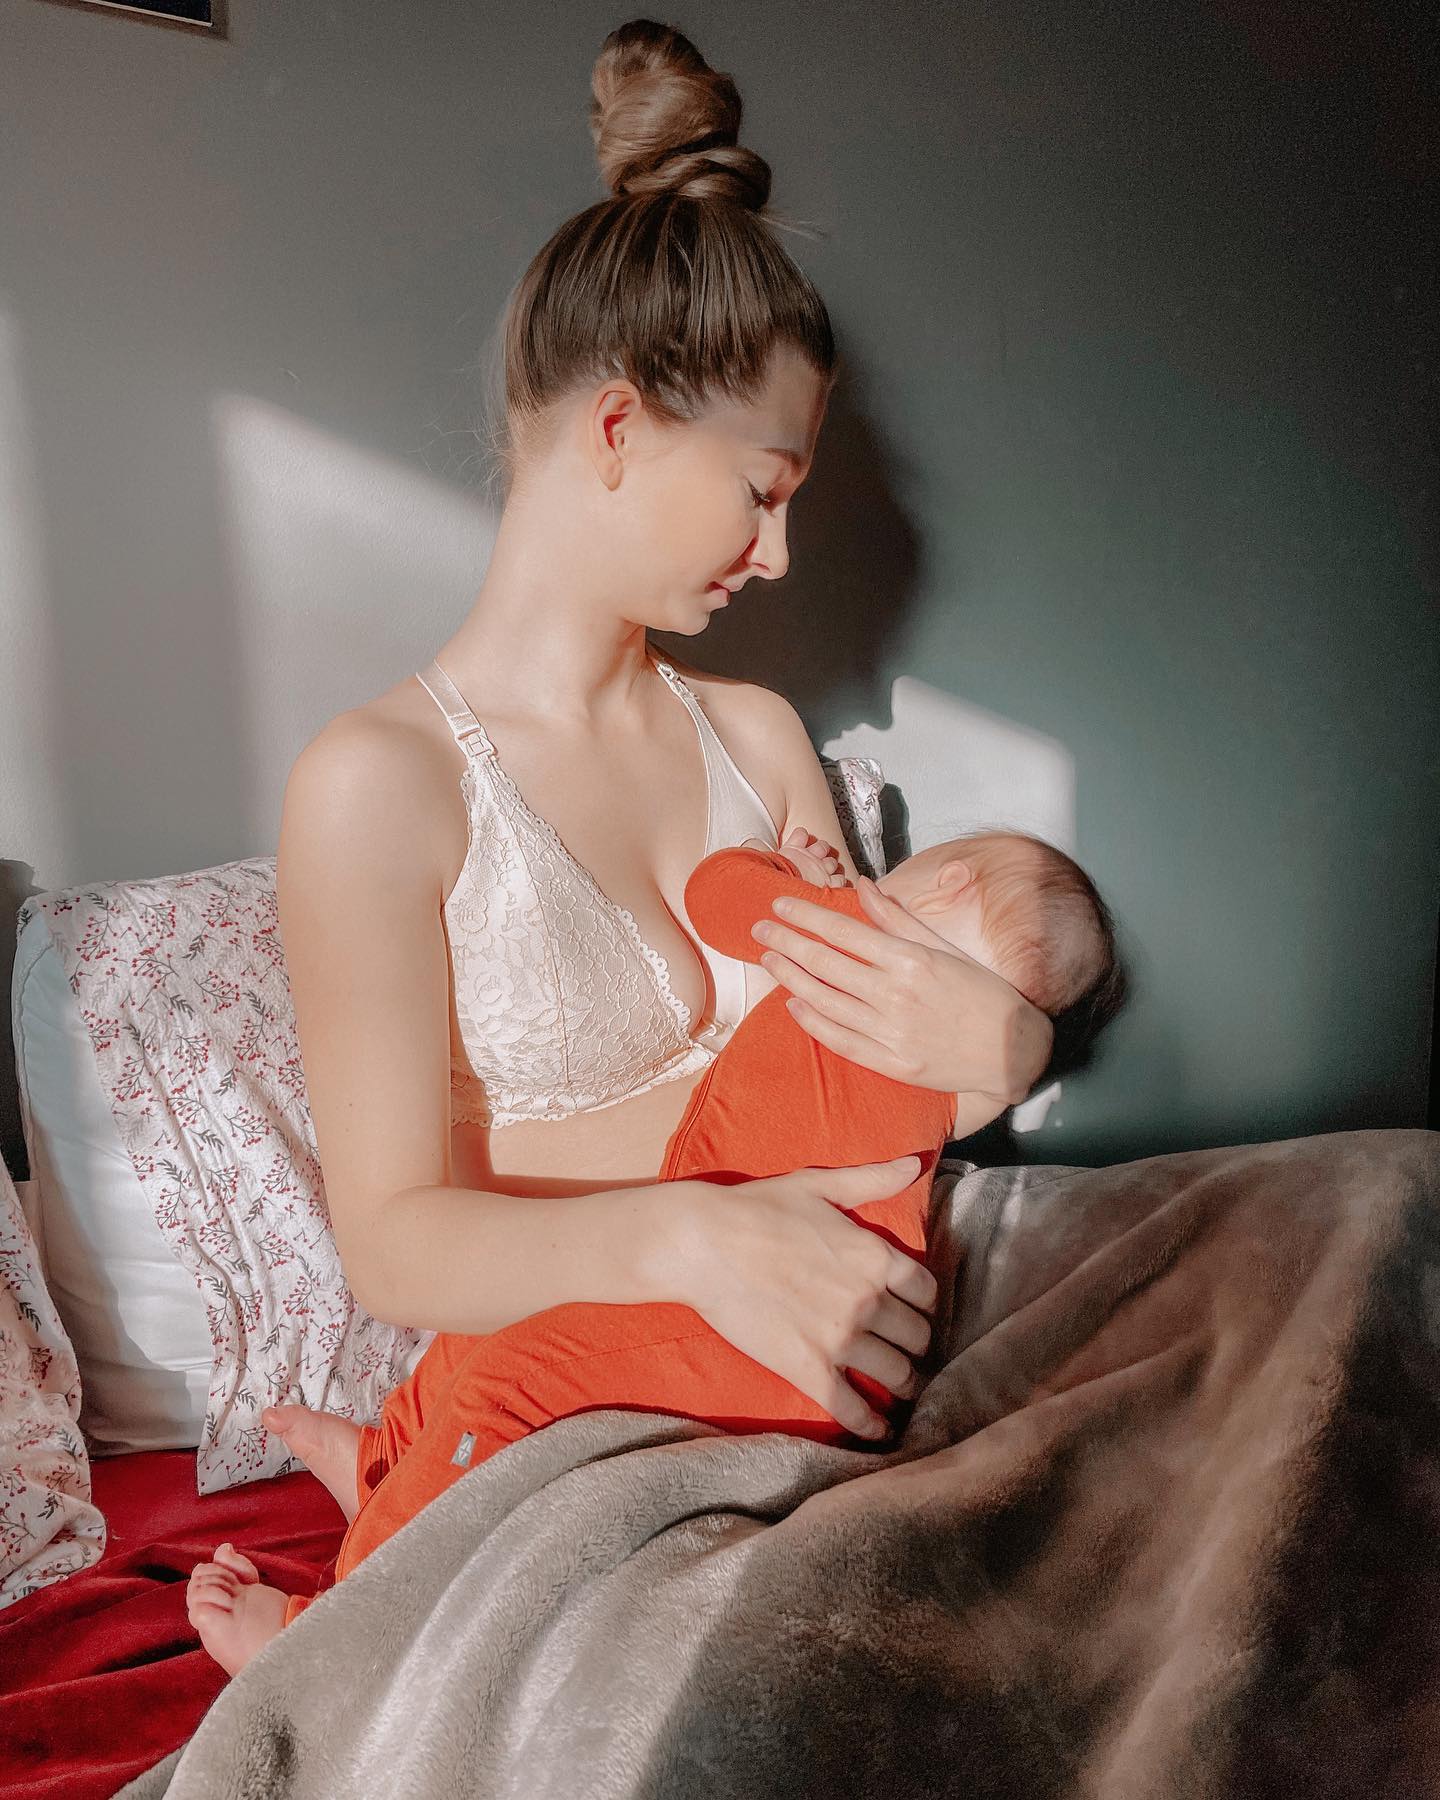 Secrets every breastfeeding mom should know